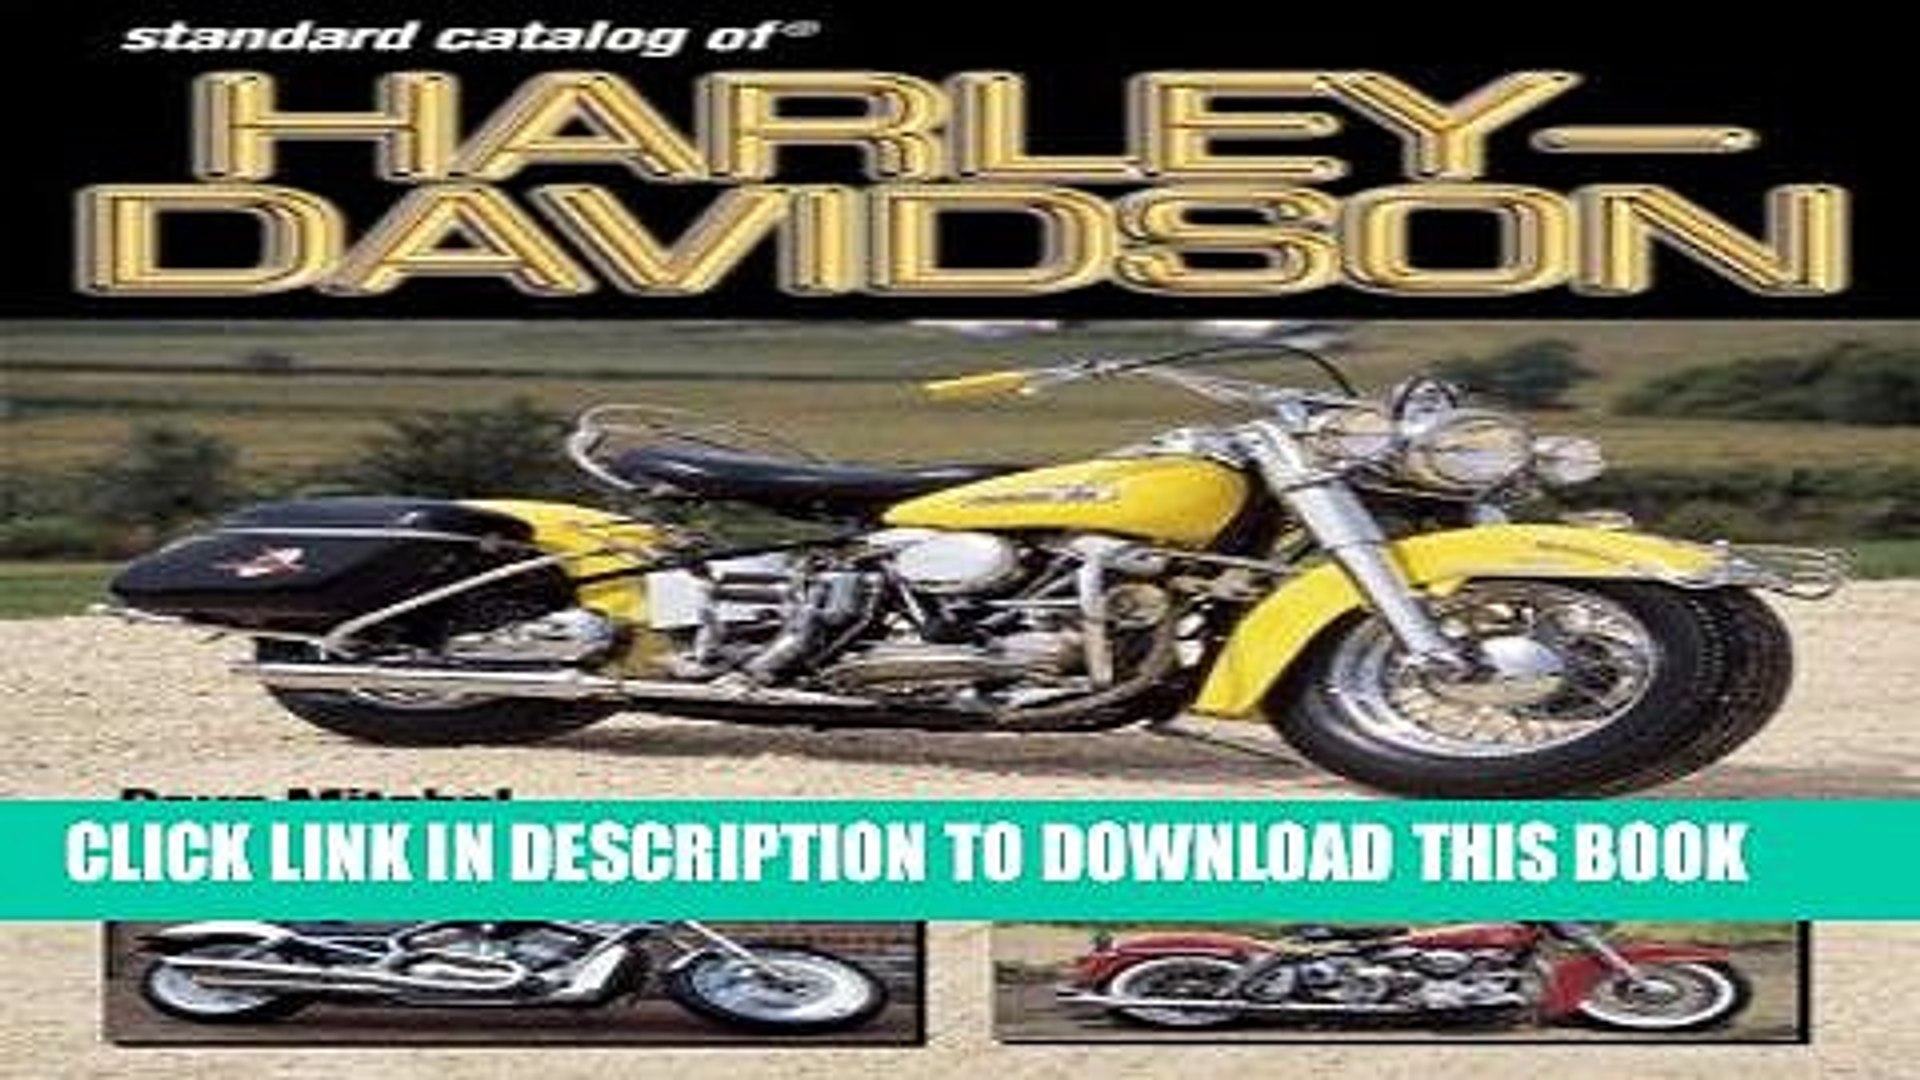 Best Seller Standard Catalog of Harley-Davidson Motorcycles (Vol i) Free Read